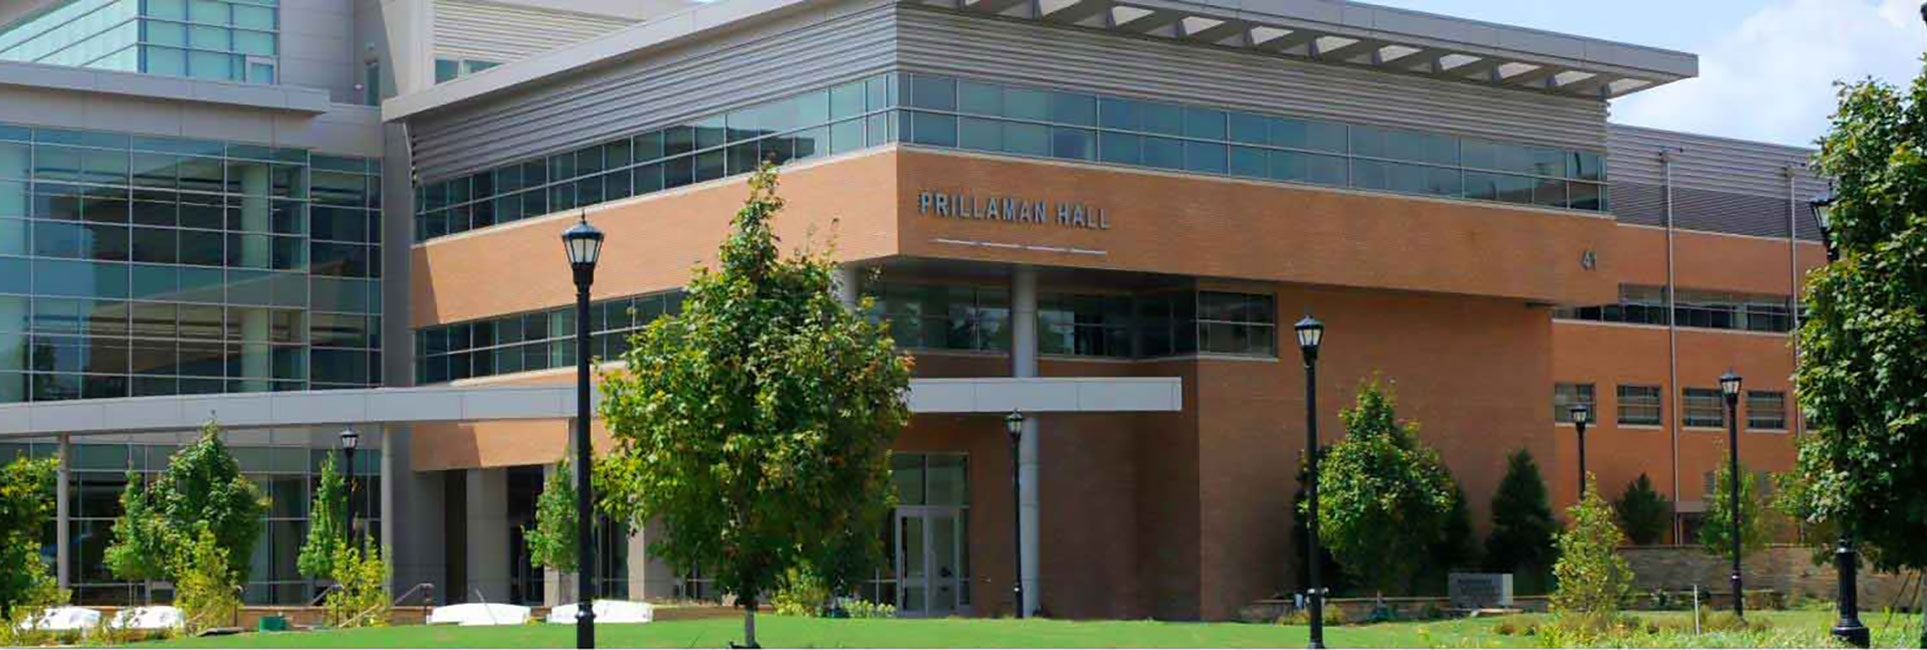 prillaman hall kennesaw state university